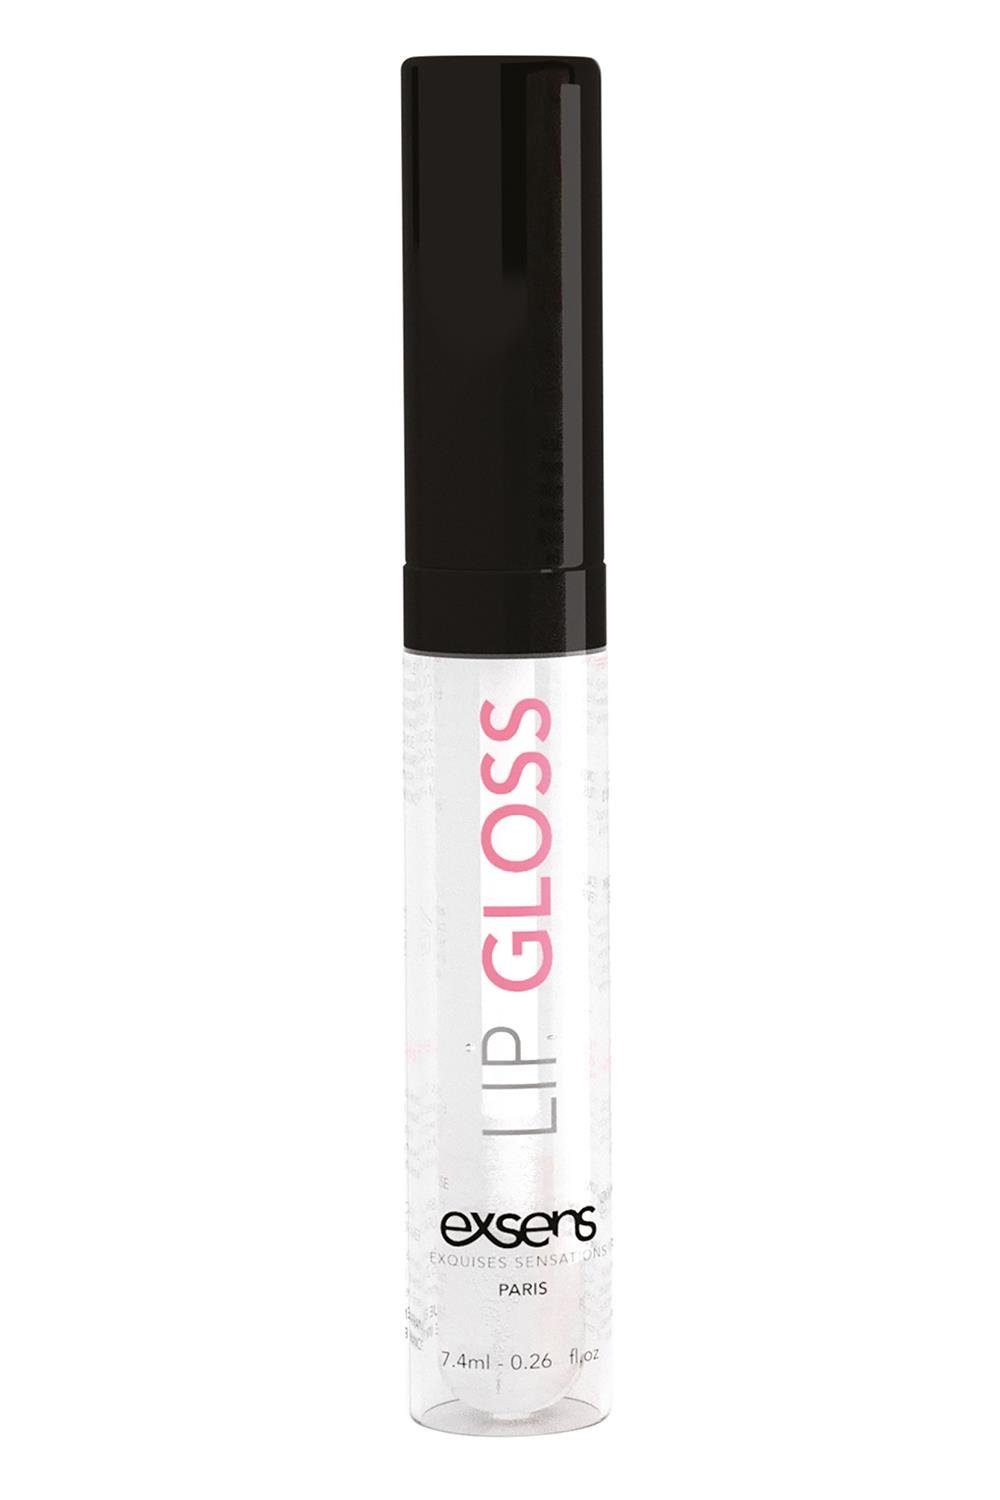 Exsens Lipgloss Exsens Hot Kiss Lip Gloss Strawberry 7,4ml, Farblos, nicht klebrig | Lipgloss